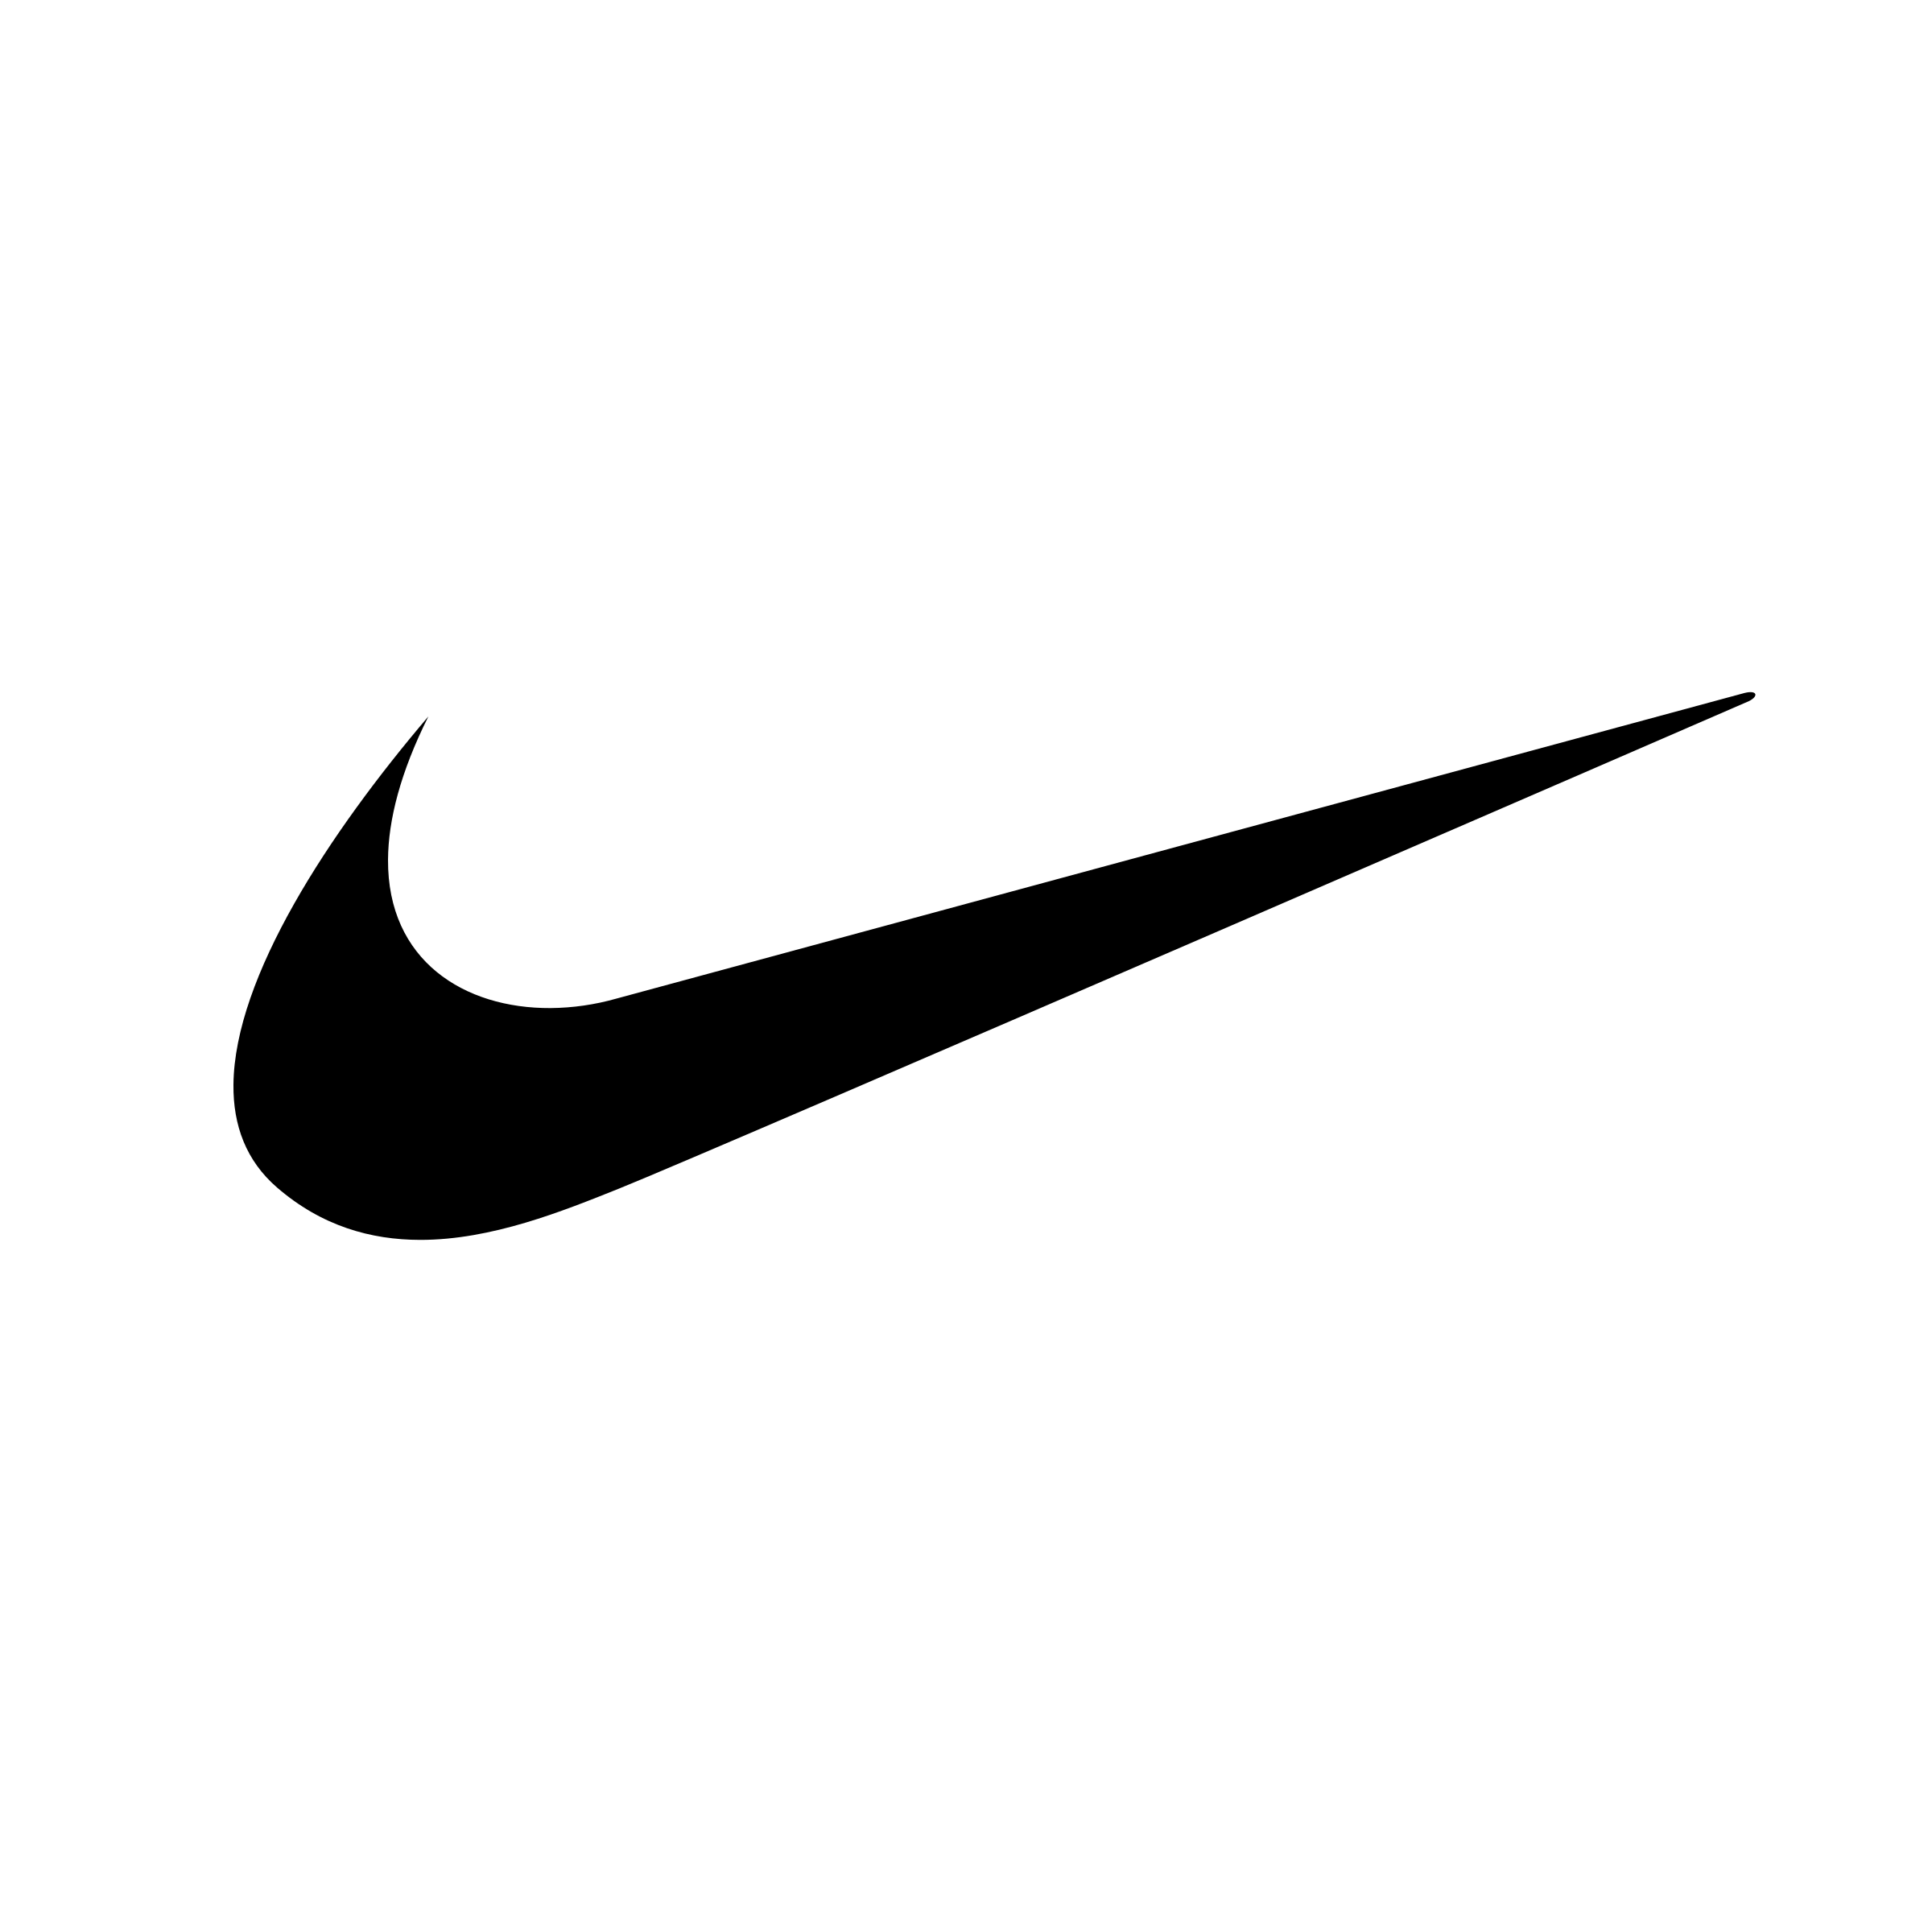 nike-4-logo-black-and-white.png